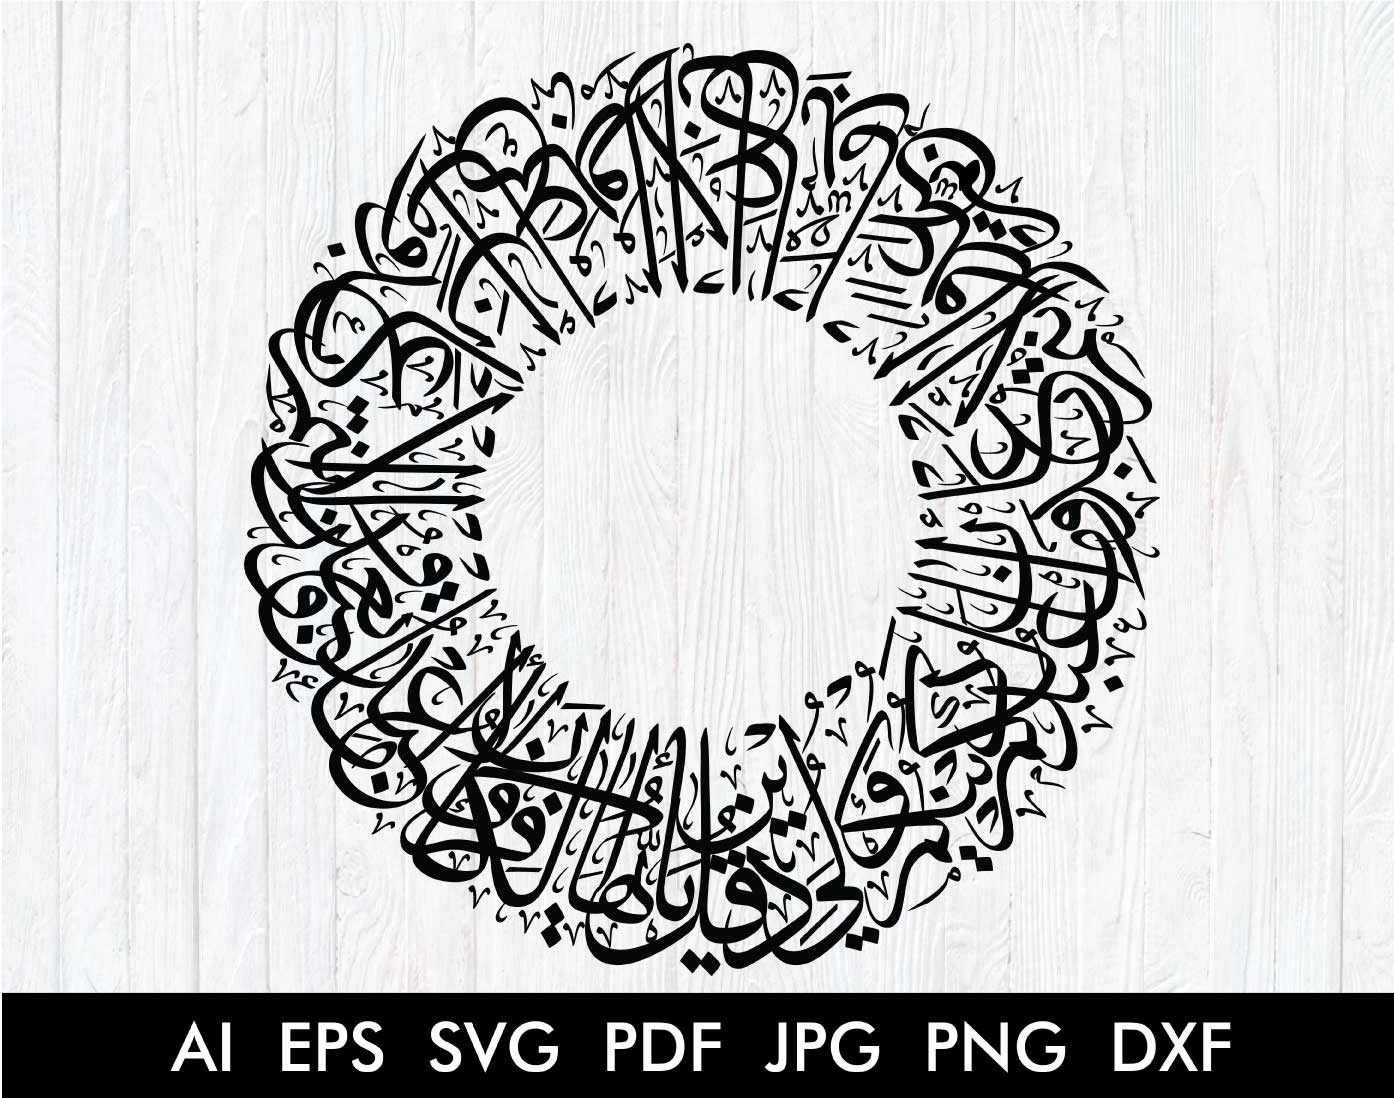 Surah Kafiroon - One of the 4 Quls Arabic Calligraphy inRound Shape - islamicwalldecors